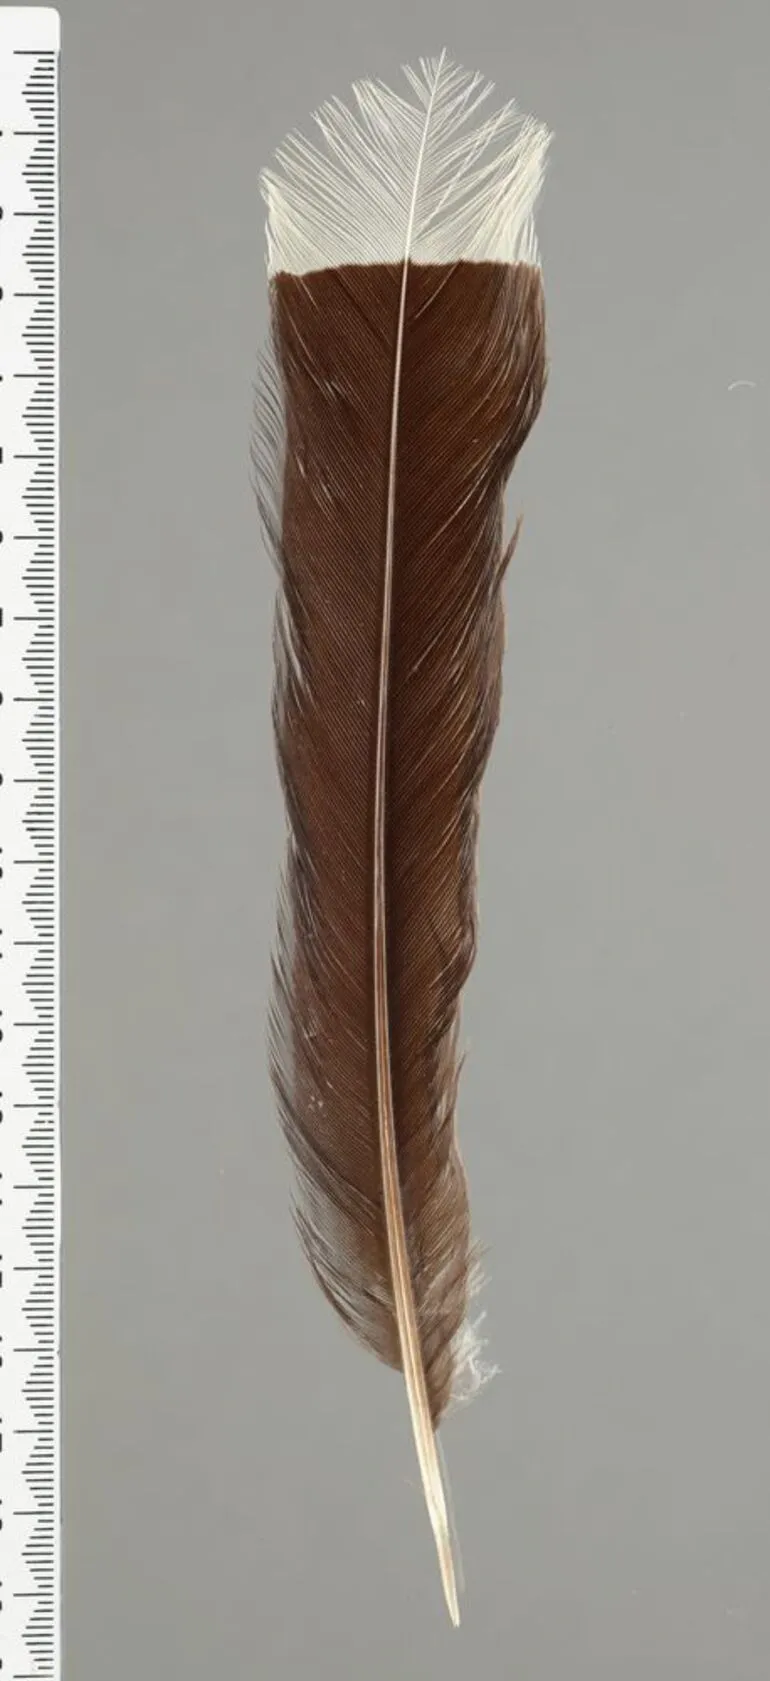 Image: Huia feather